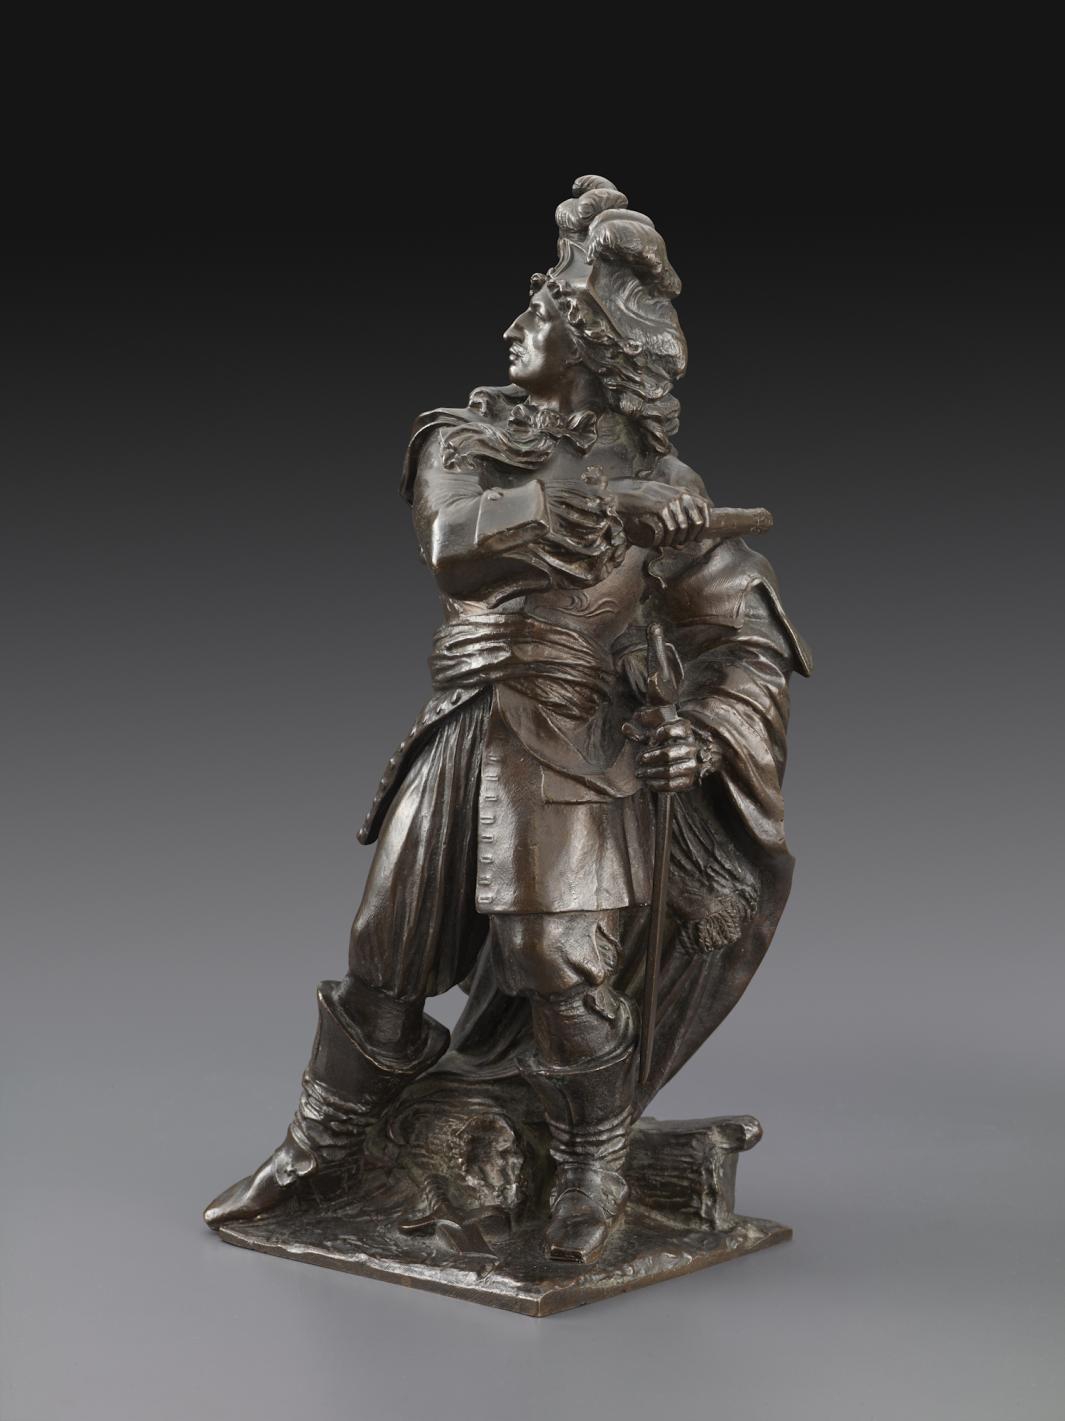 bronze sculpture of standing man in European military uniform, holding saber